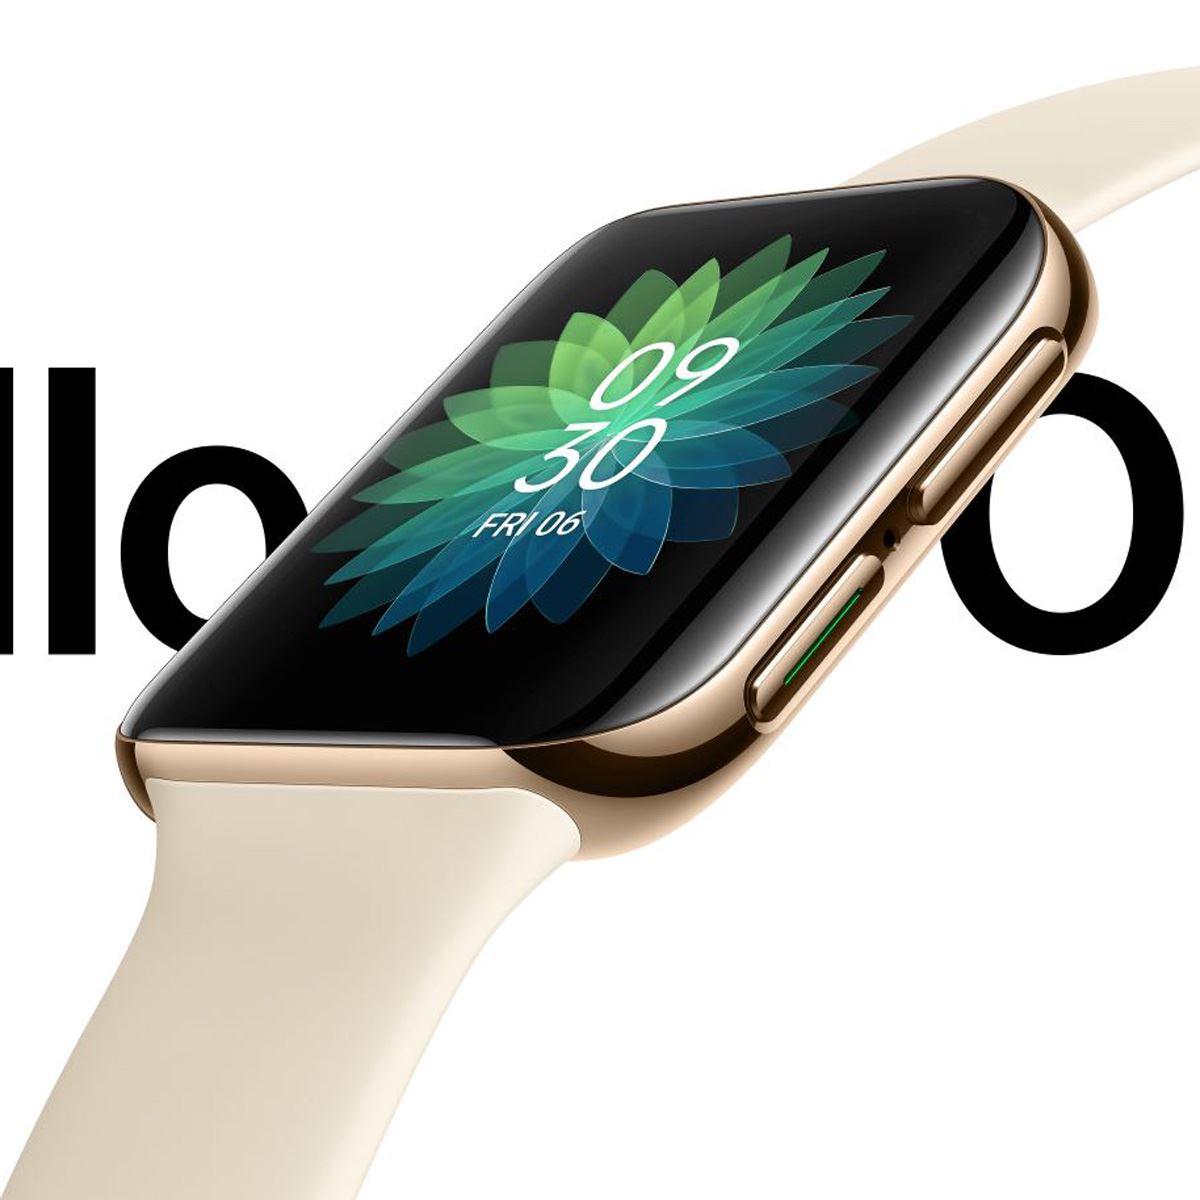 Apple Watchじゃないよ。OPPOが初のスマートウォッチ「Oppo Watch 